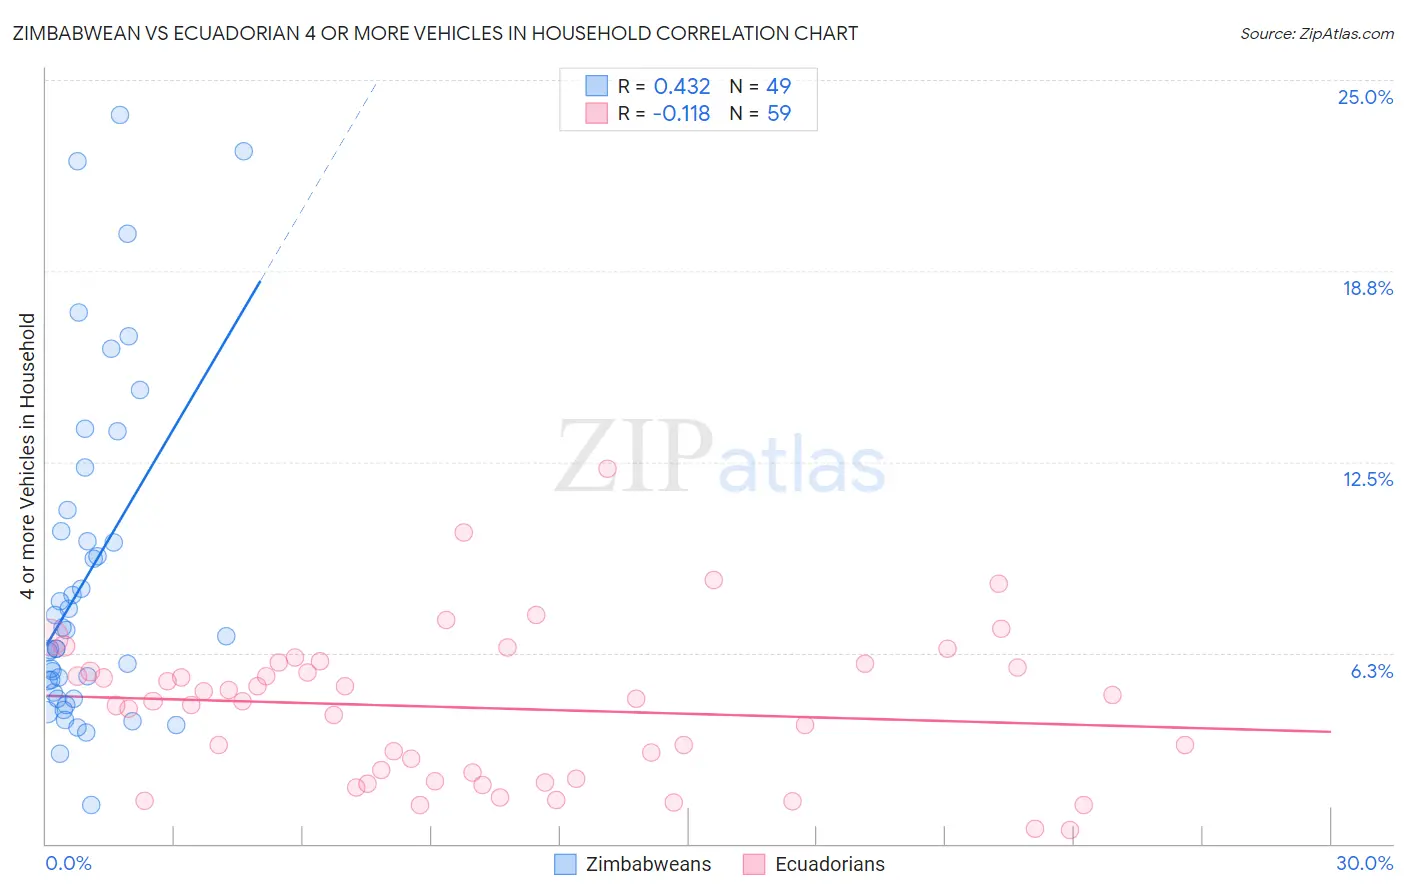 Zimbabwean vs Ecuadorian 4 or more Vehicles in Household